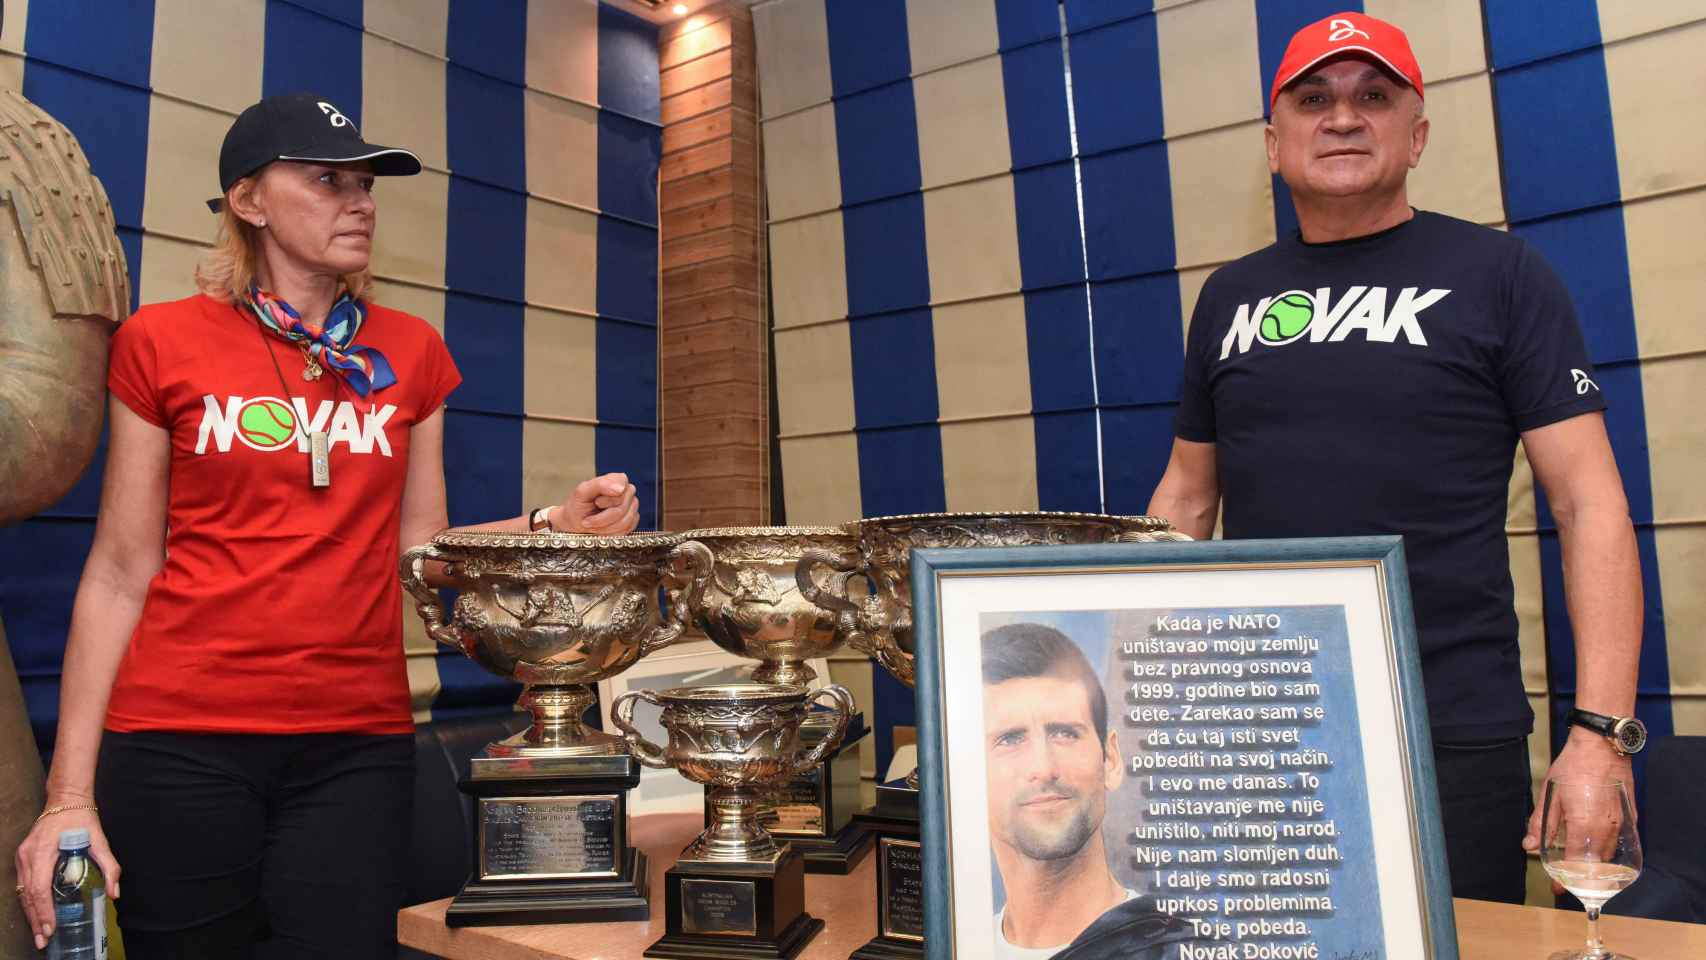 Srdjan Djokovic, padre del tenista serbio